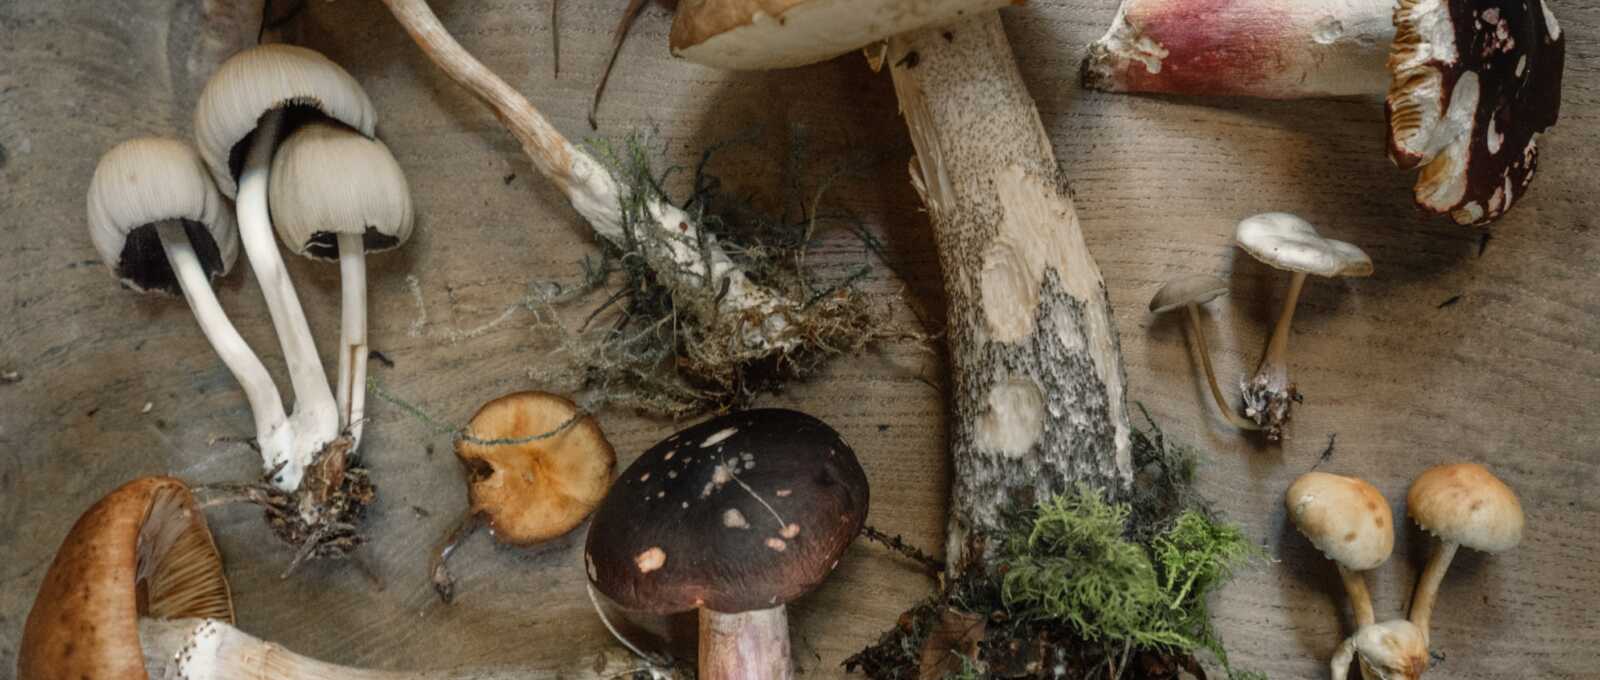 natural-mushrooms-exposed-to-UV-contain-vitamin-d